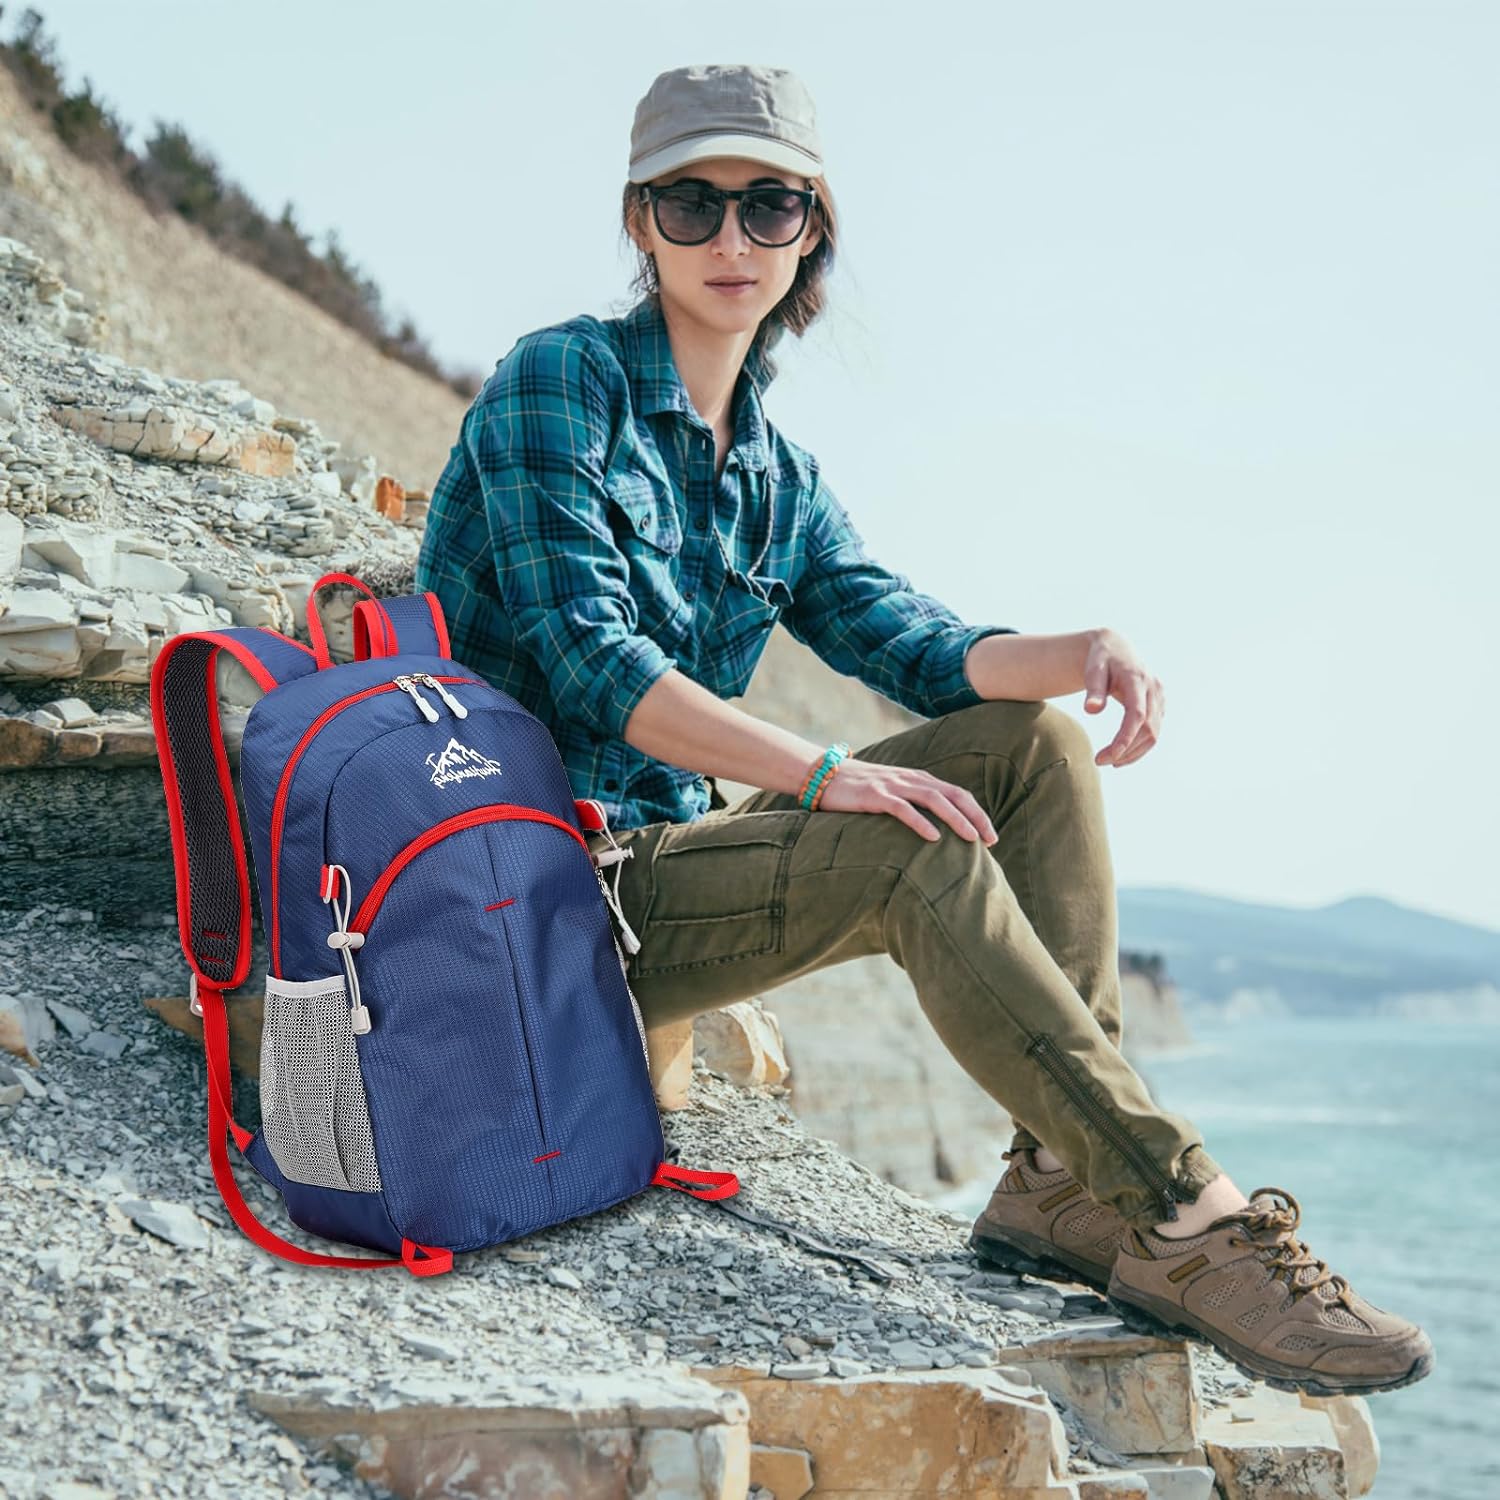 Ultra Lightweight Foldable Backpack, 20L Hiking Backpack Water Resistant Rucksack, Durable Packable Backpack for Men Women, for Outdoor Sport Travelling Walking Hiking Camping Biking